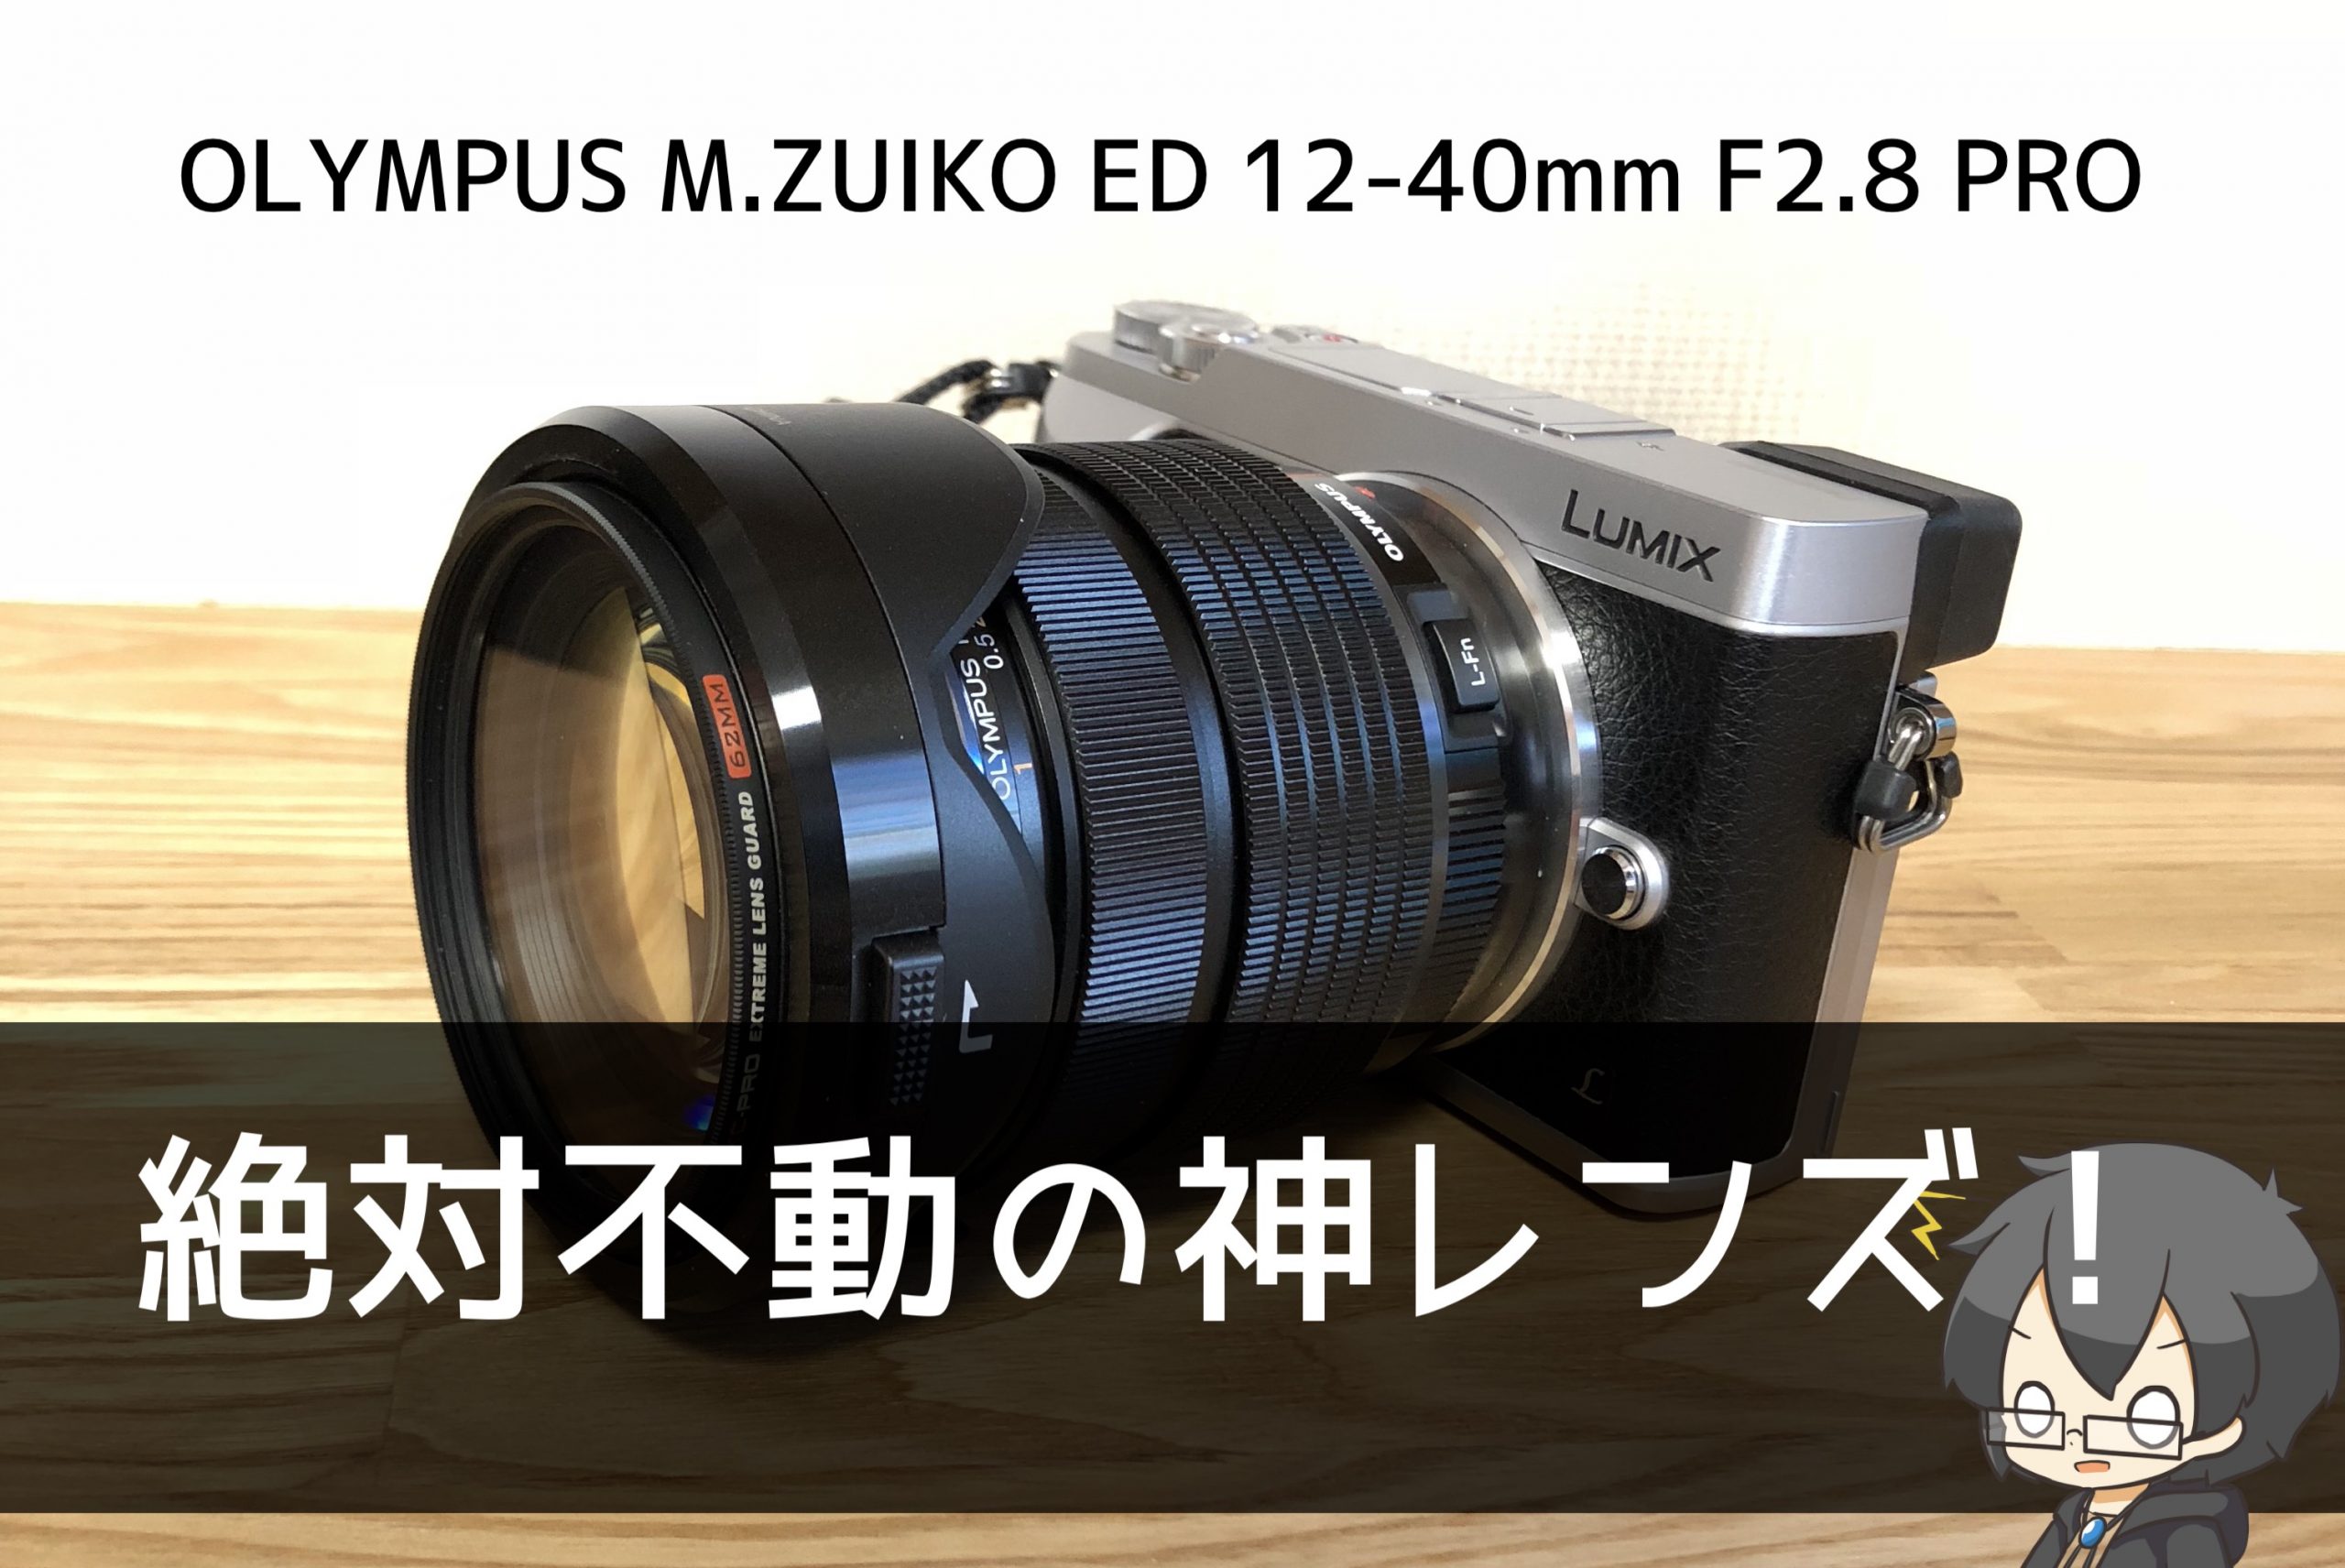 Olympus 12-40mm f2.8 pro